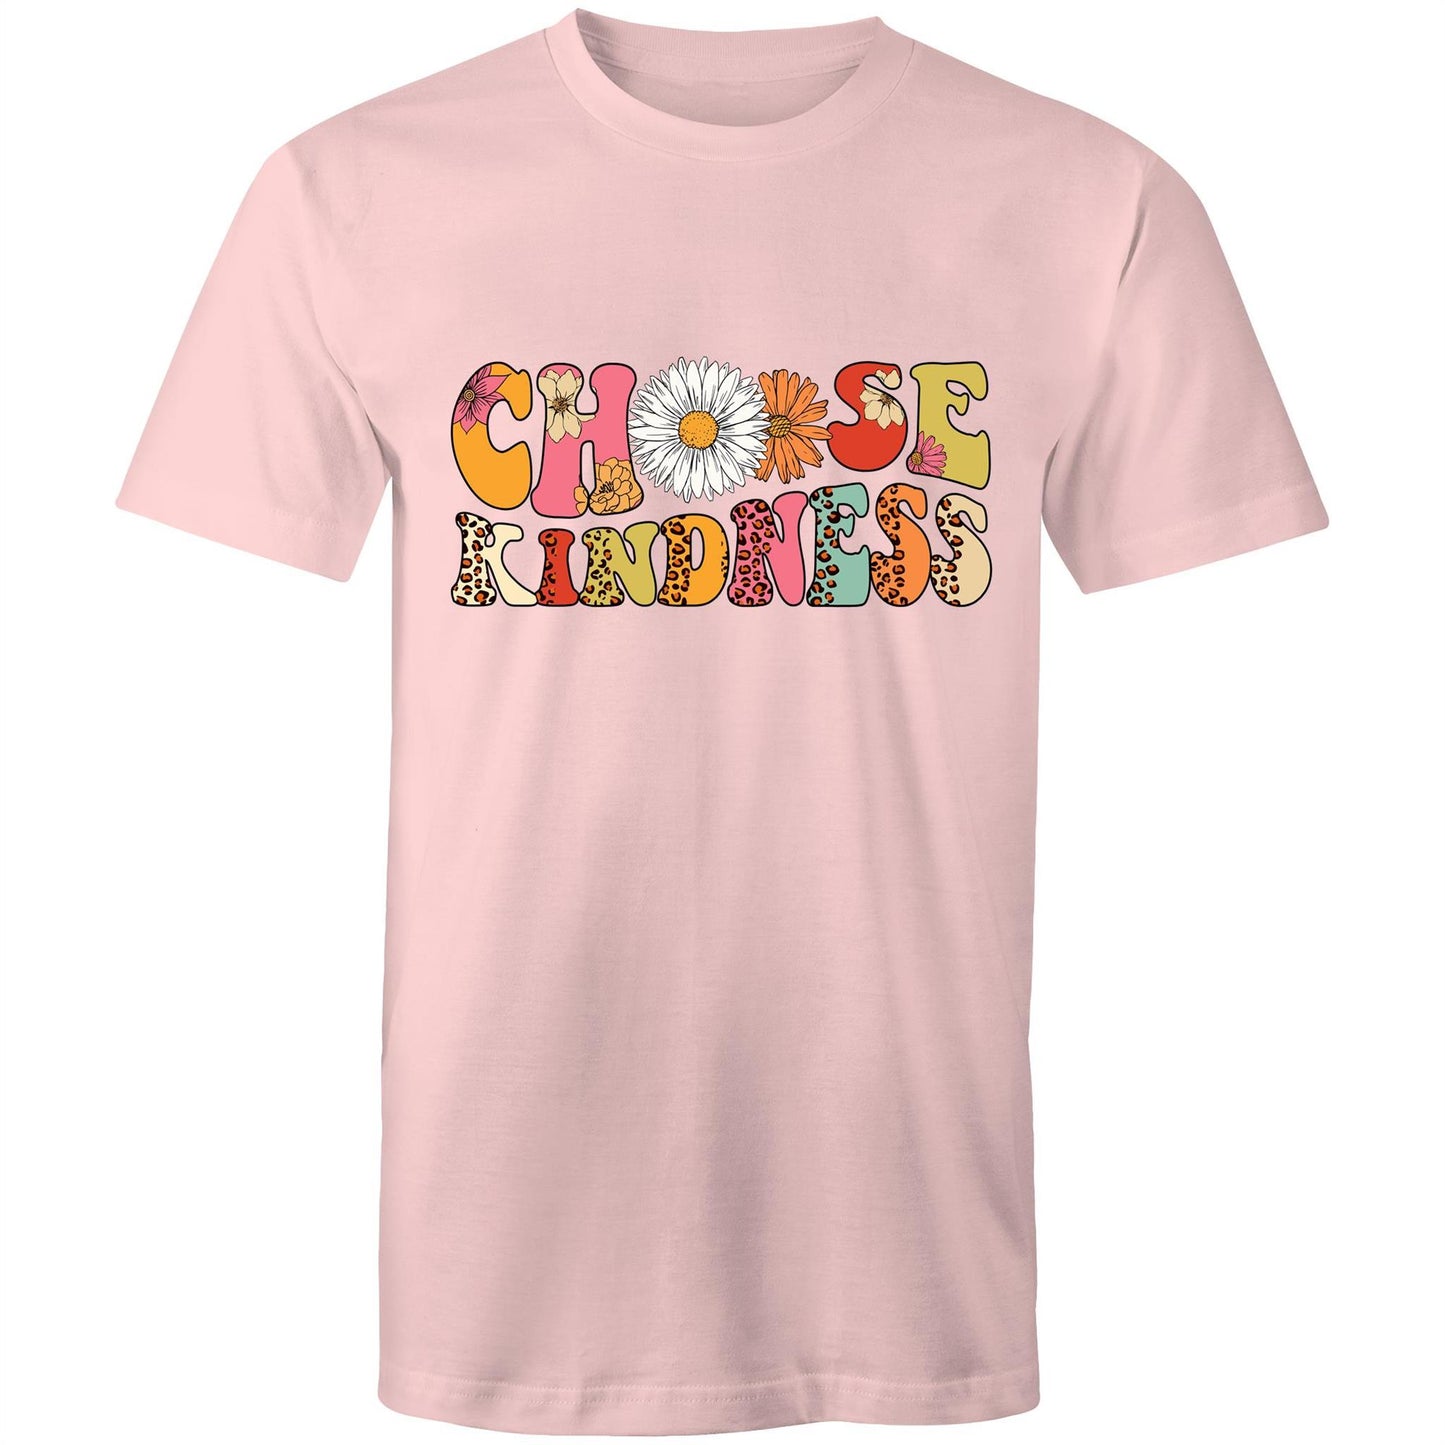 Mens T-Shirt - Choose Kindness Flower